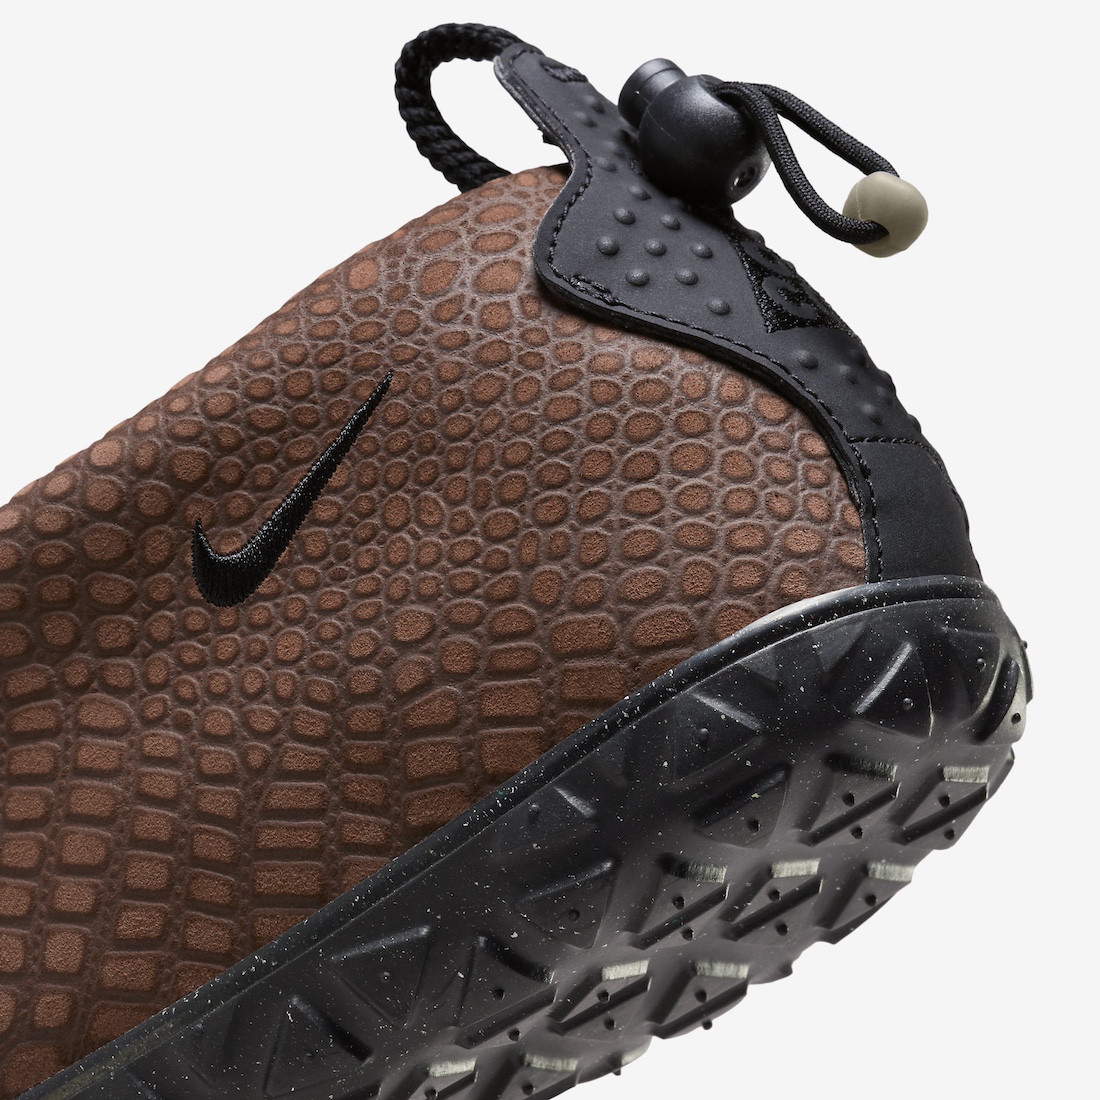 Nike-ACG-Moc-Premium-Cacao-Wow-7.jpeg